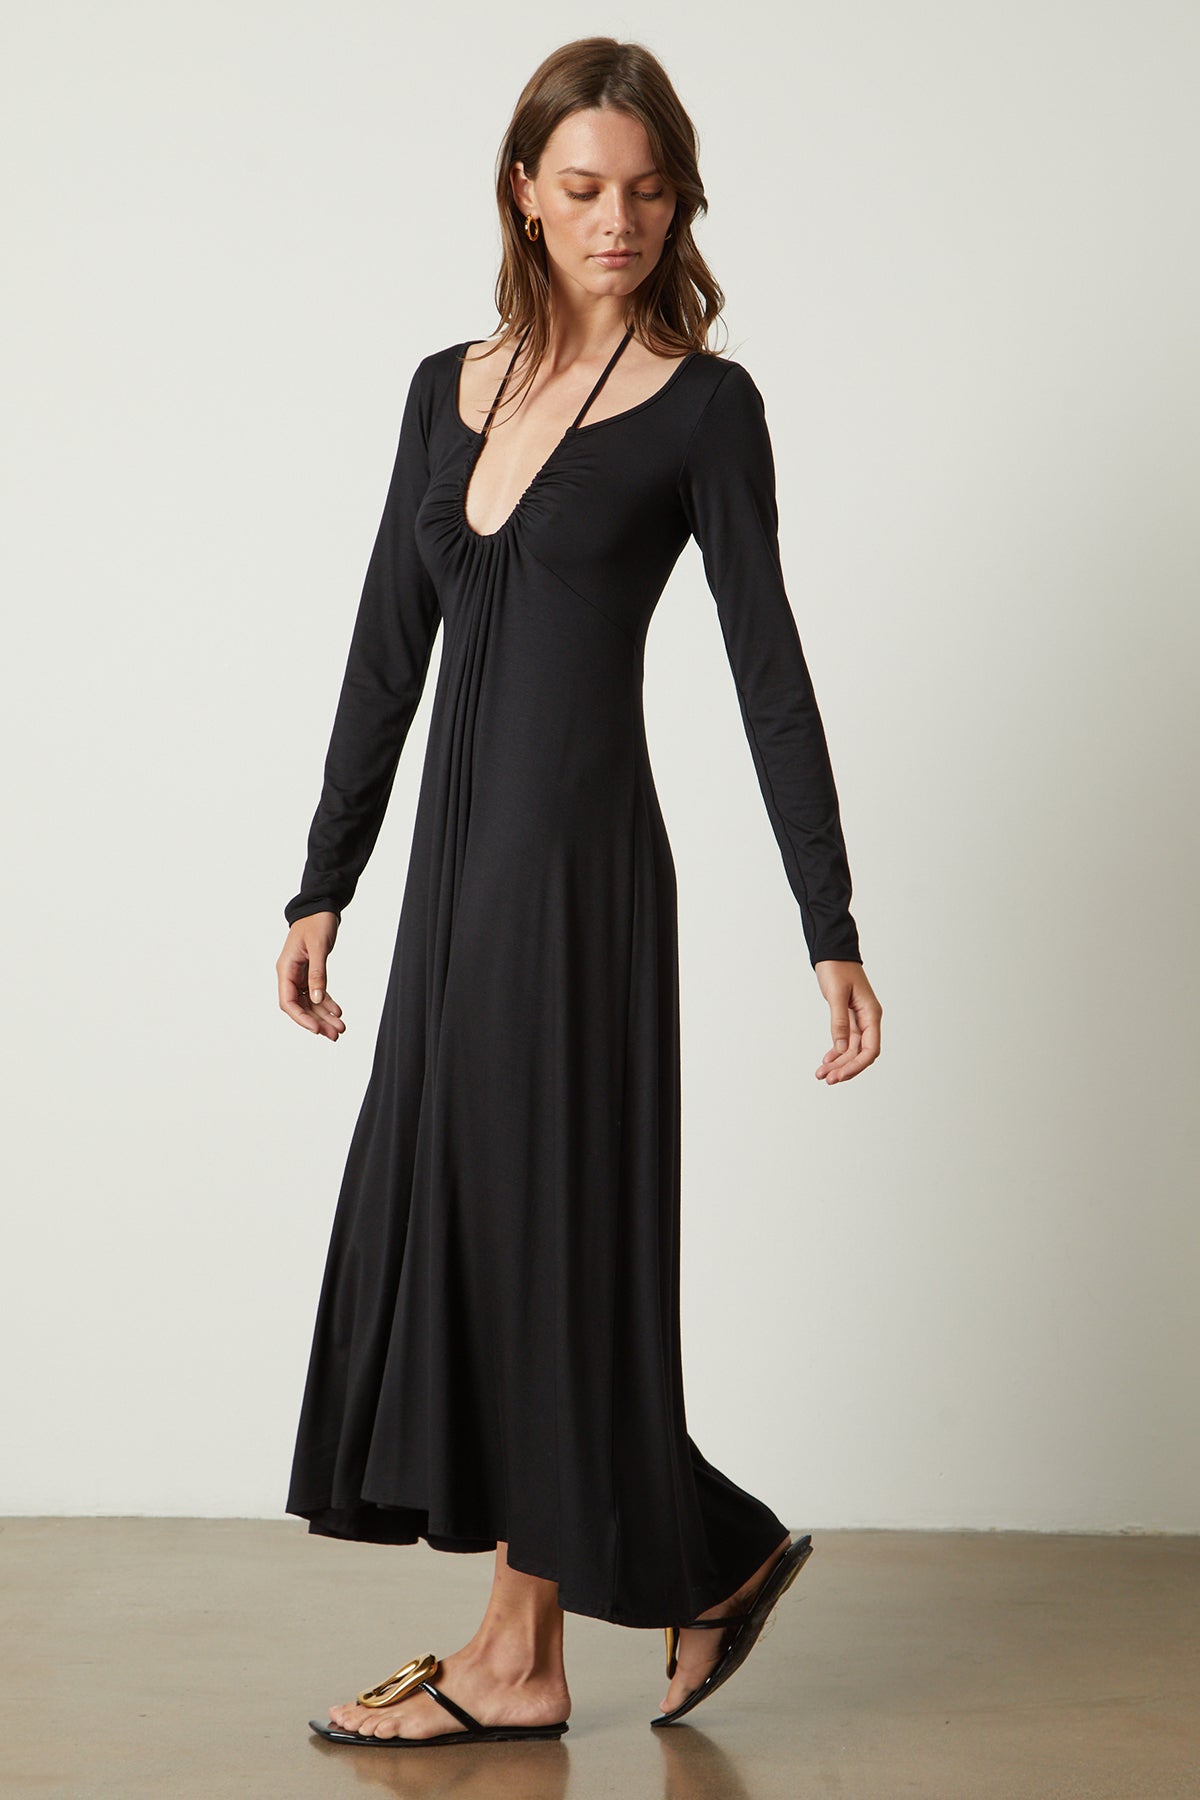 Jules Maxi Dress in black full length front & side-26143151587521